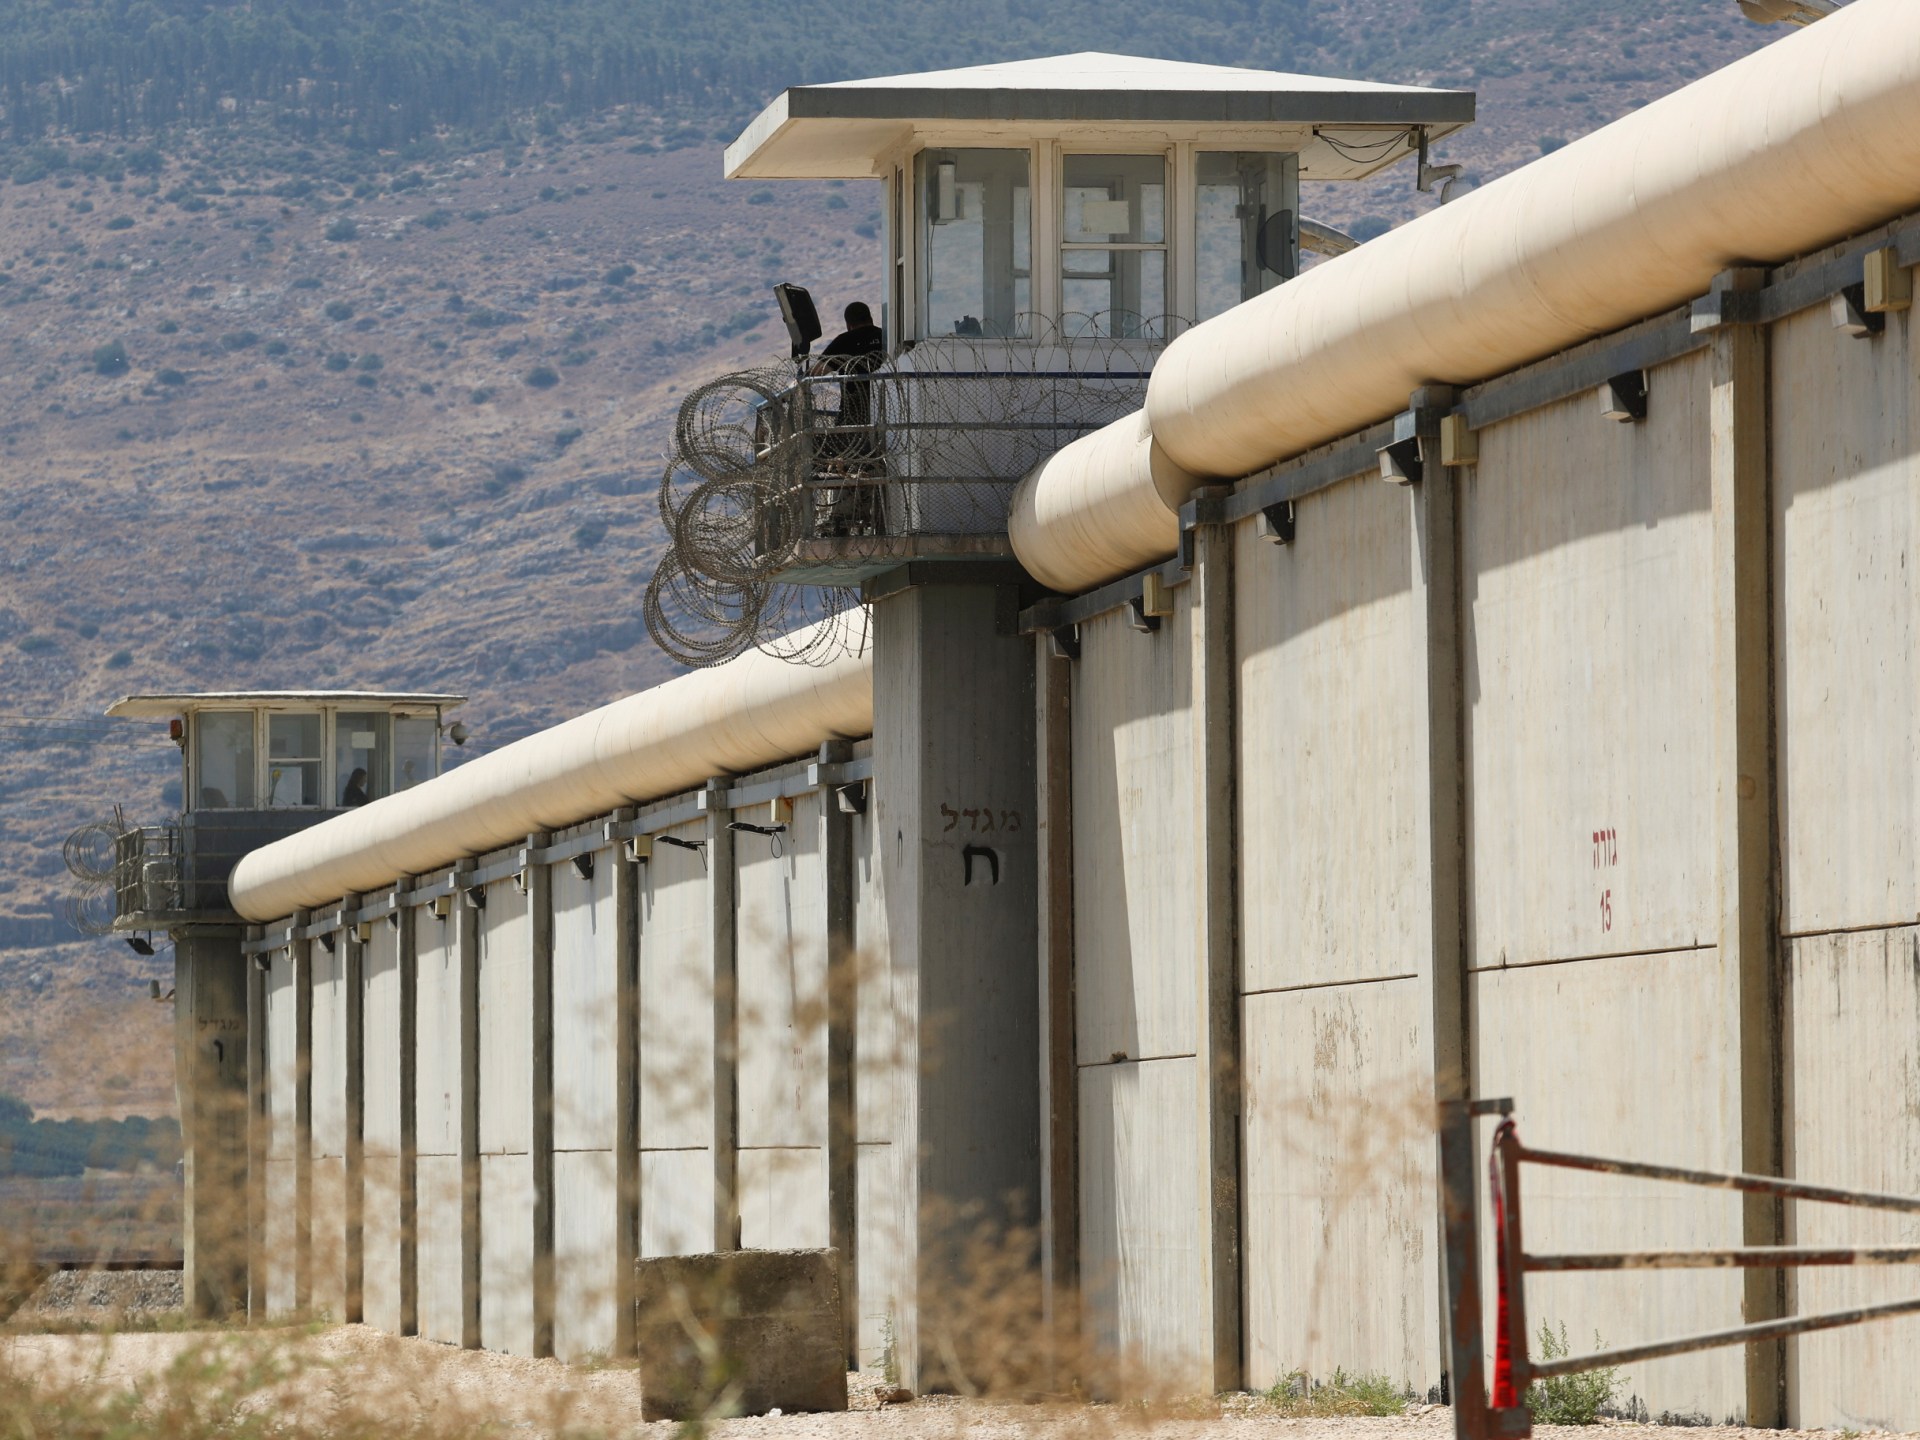 Tensions simmer among Palestinian prisoners as Israel cracks down